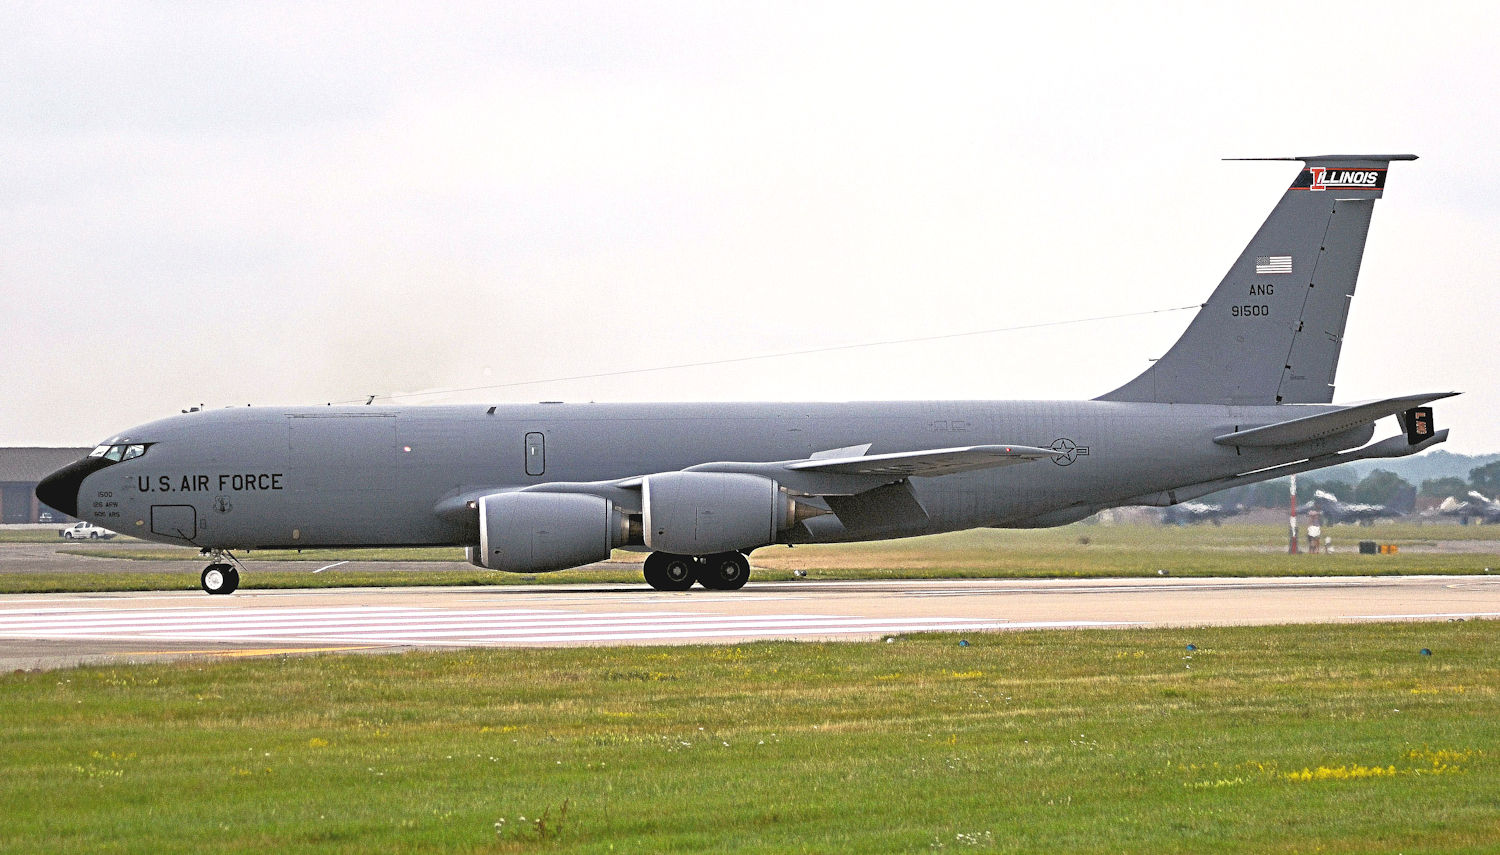 59-1500/591500 USAF - United States Air Force Boeing C-135 Stratotanker Airframe Information - AVSpotters.com